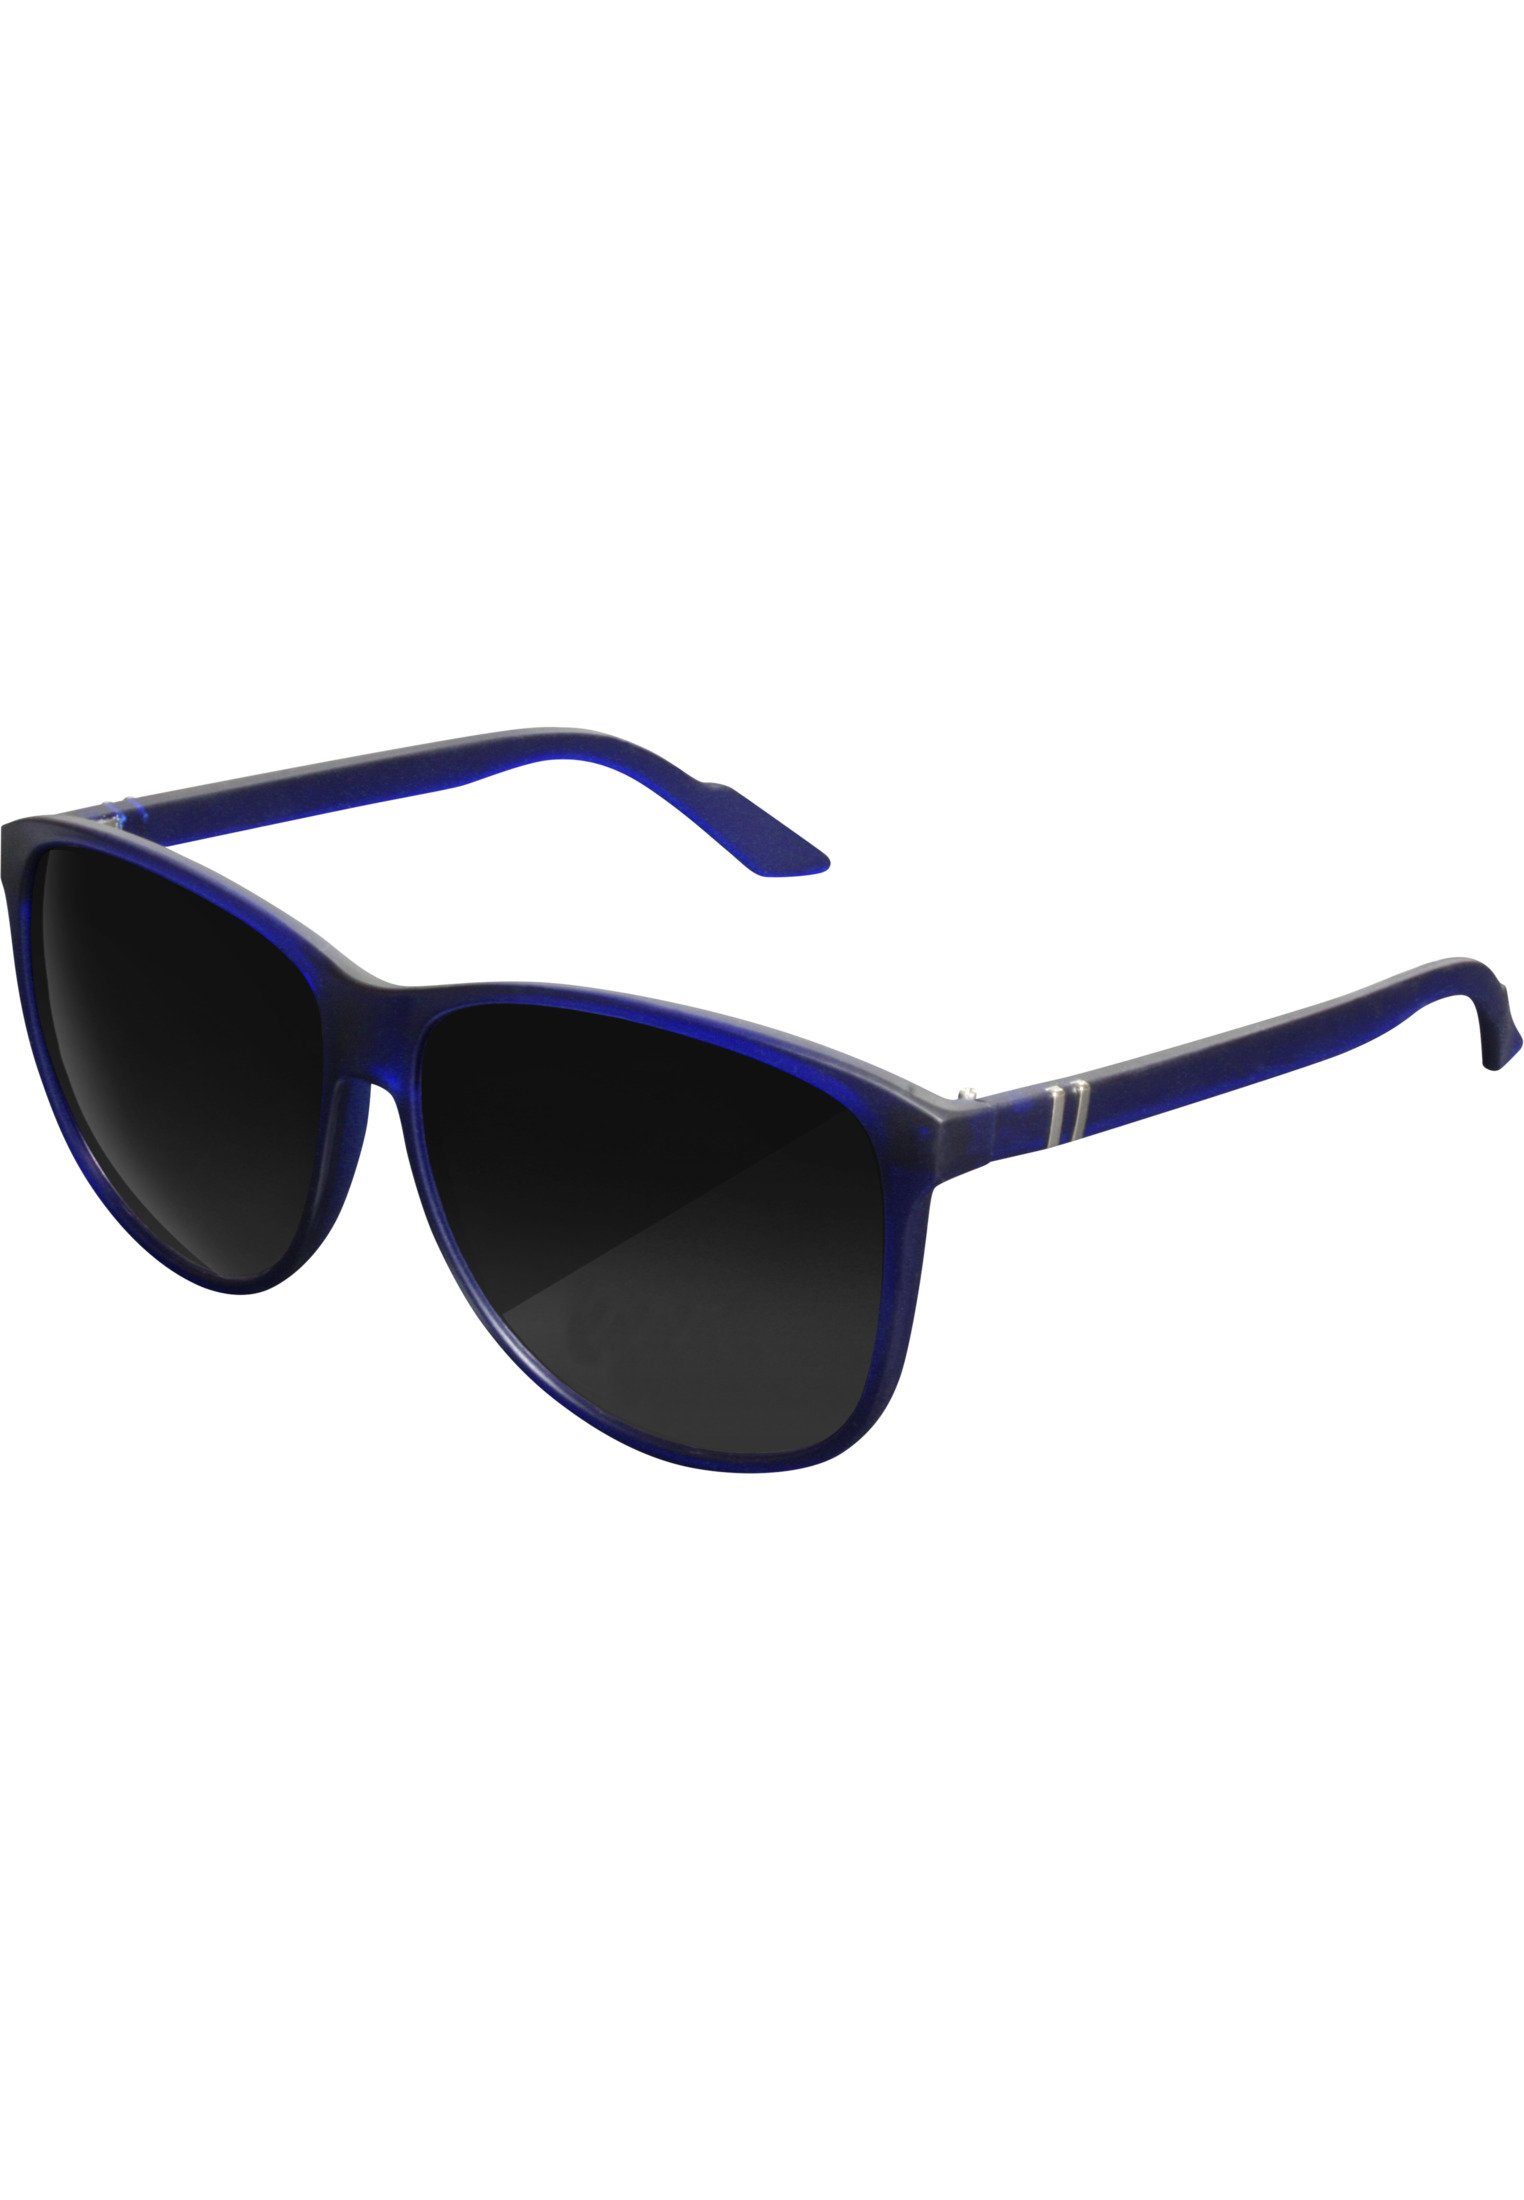 MSTRDS Sonnenbrille Accessoires Chirwa Sunglasses royal